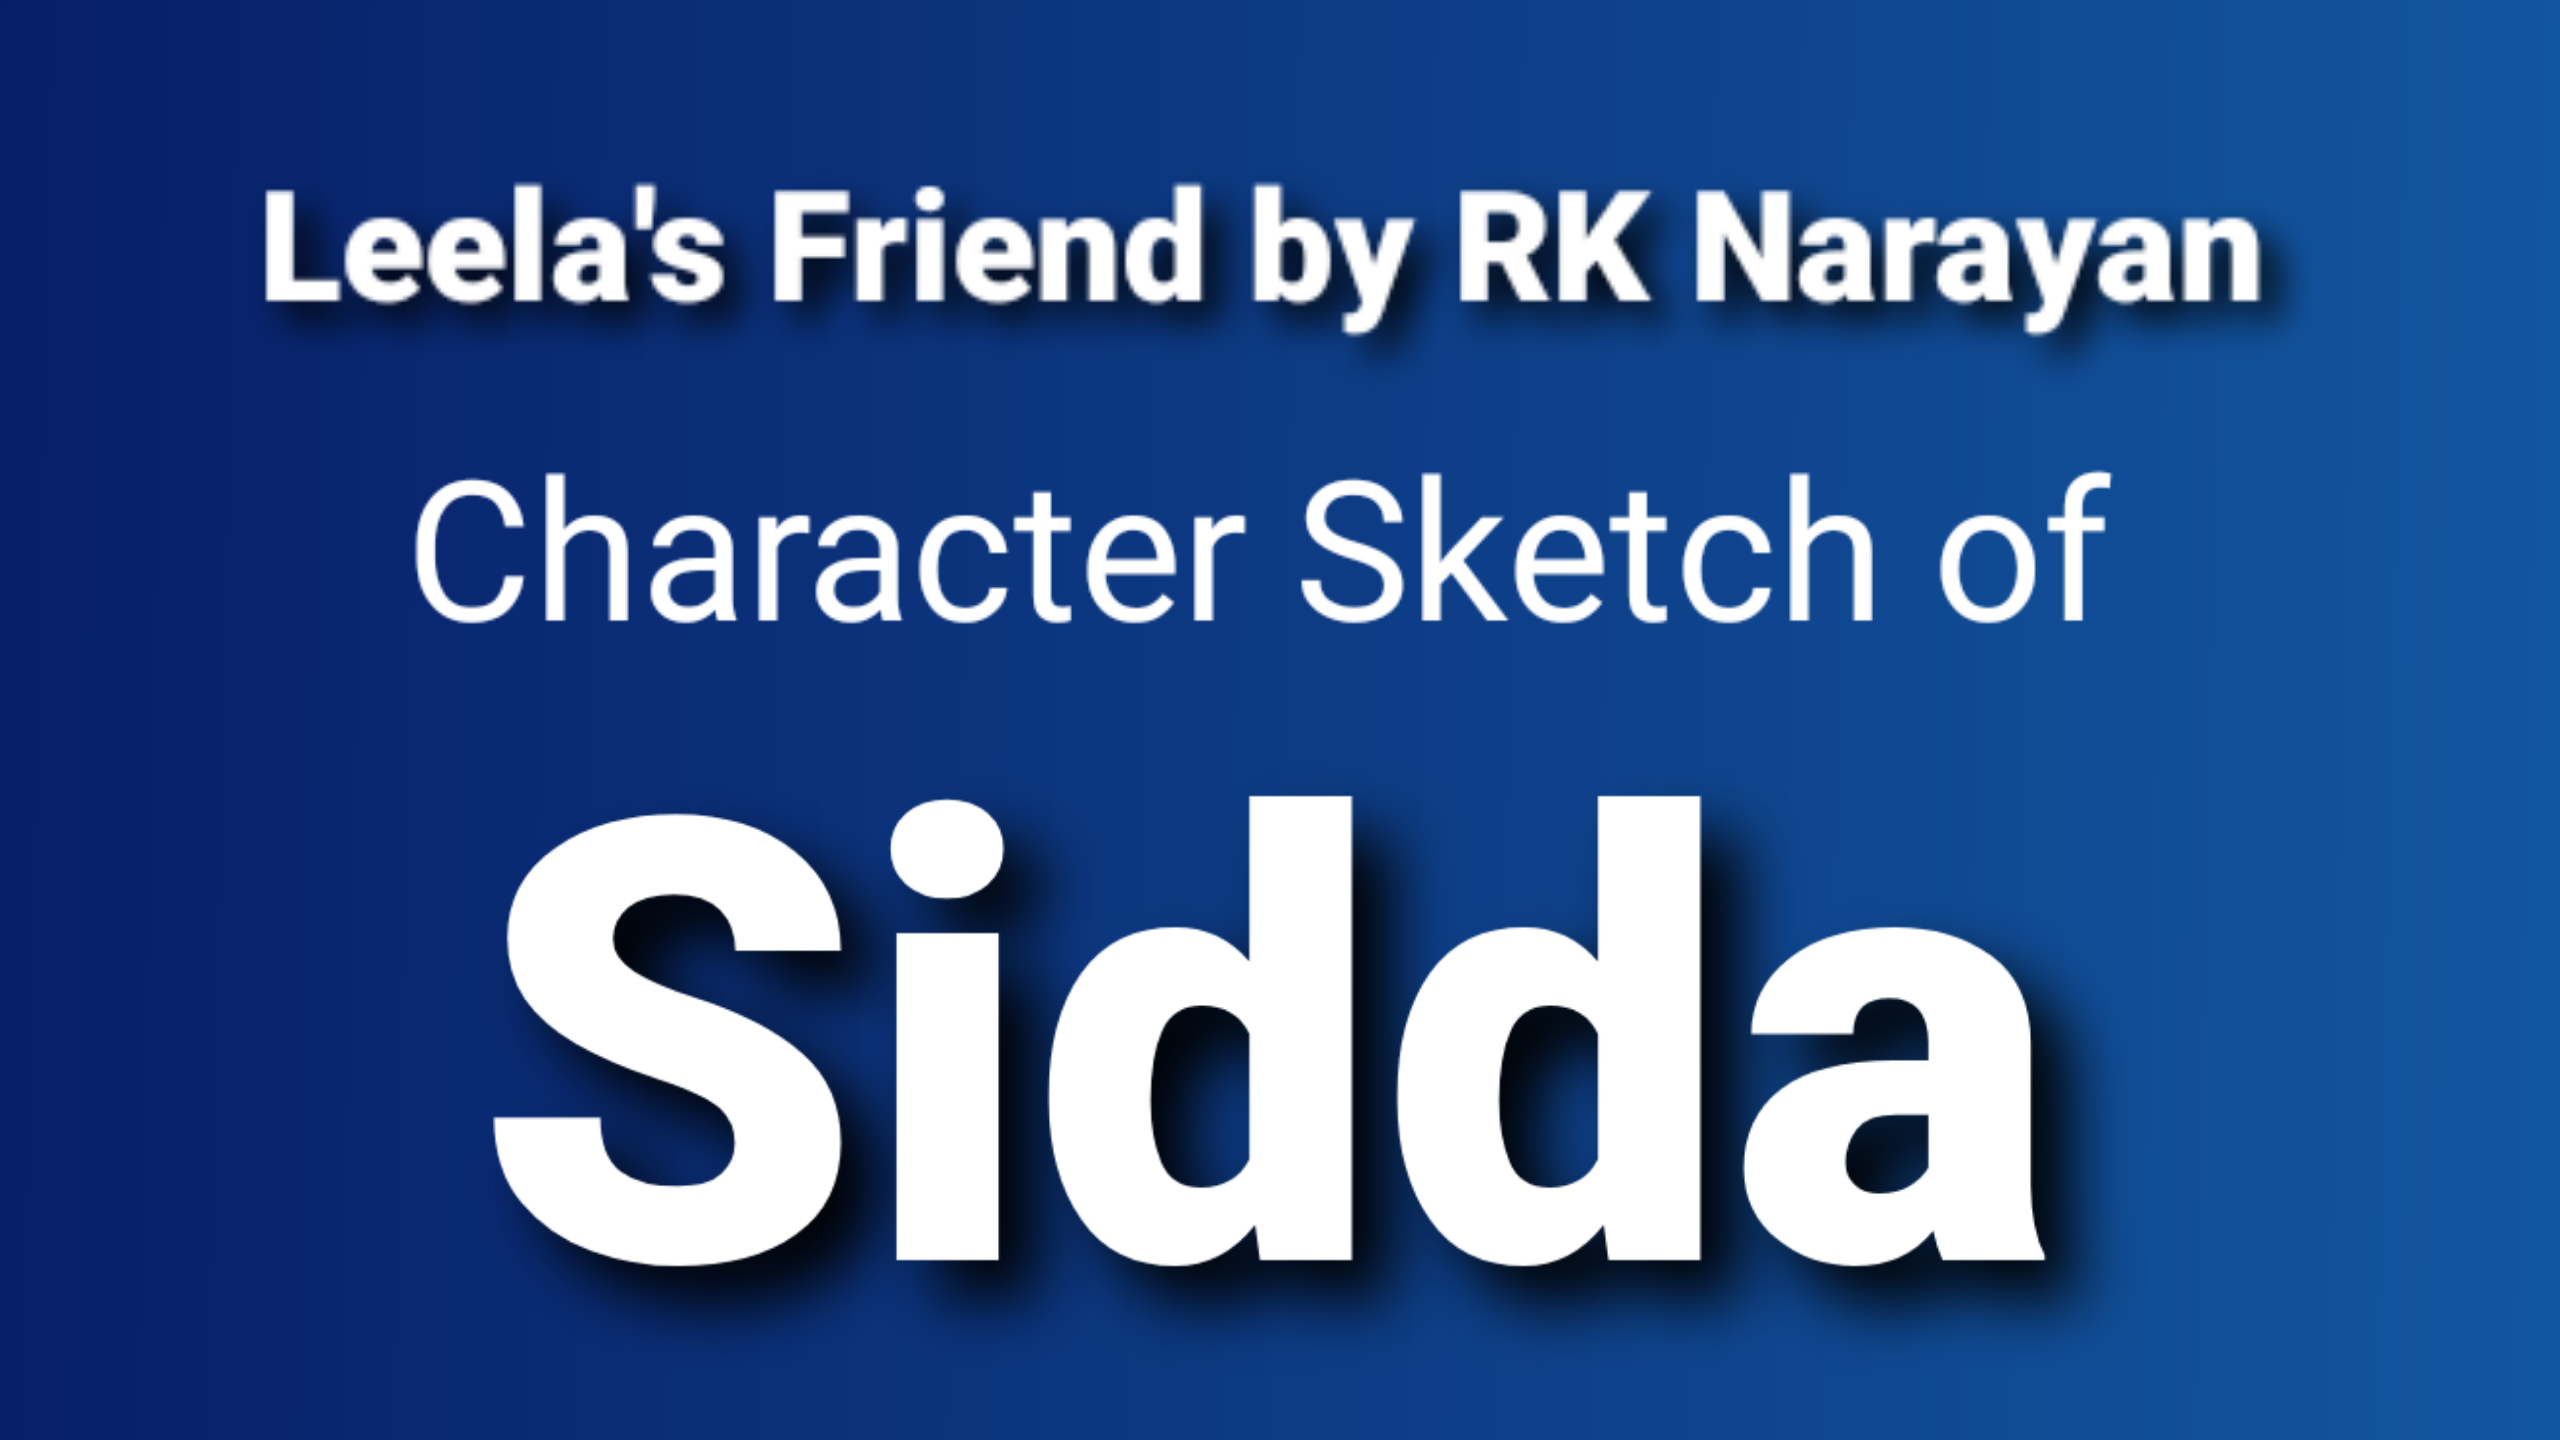 Character Sketch of Sidda in R K Narayans LEELAS FRIEND  YouTube